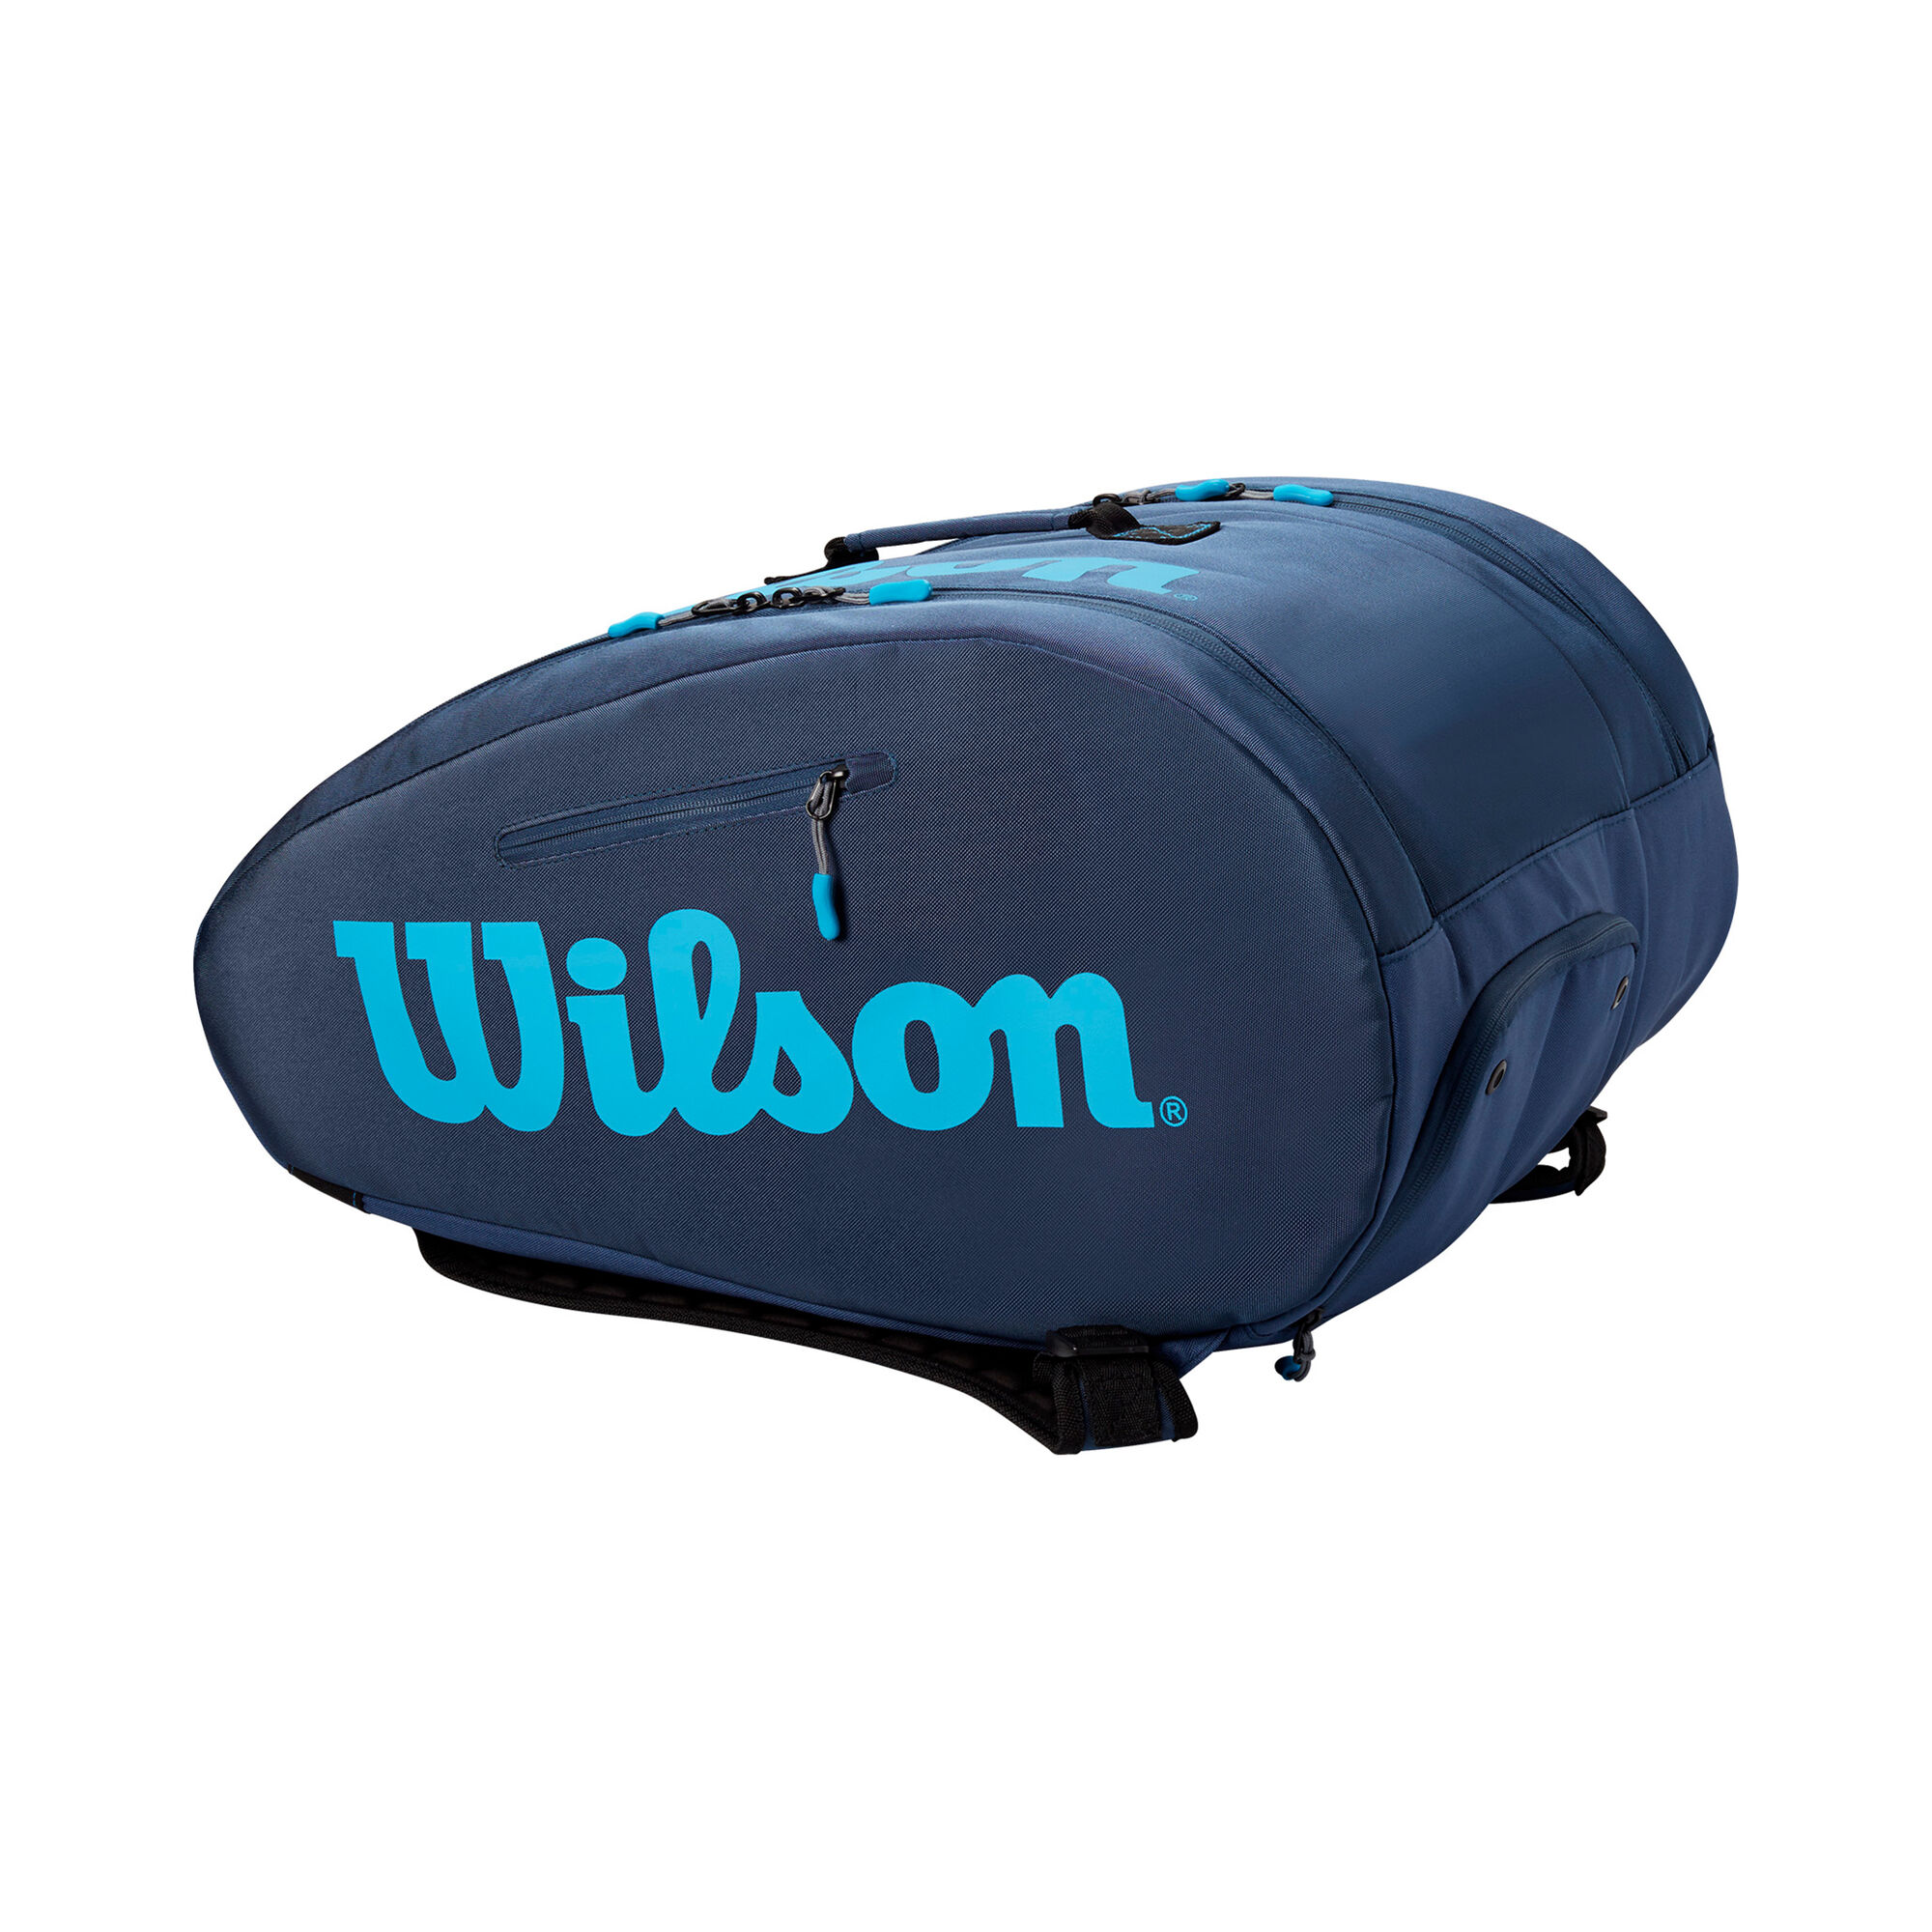 Buy Wilson Super Tour Sac De Padel Bleu online